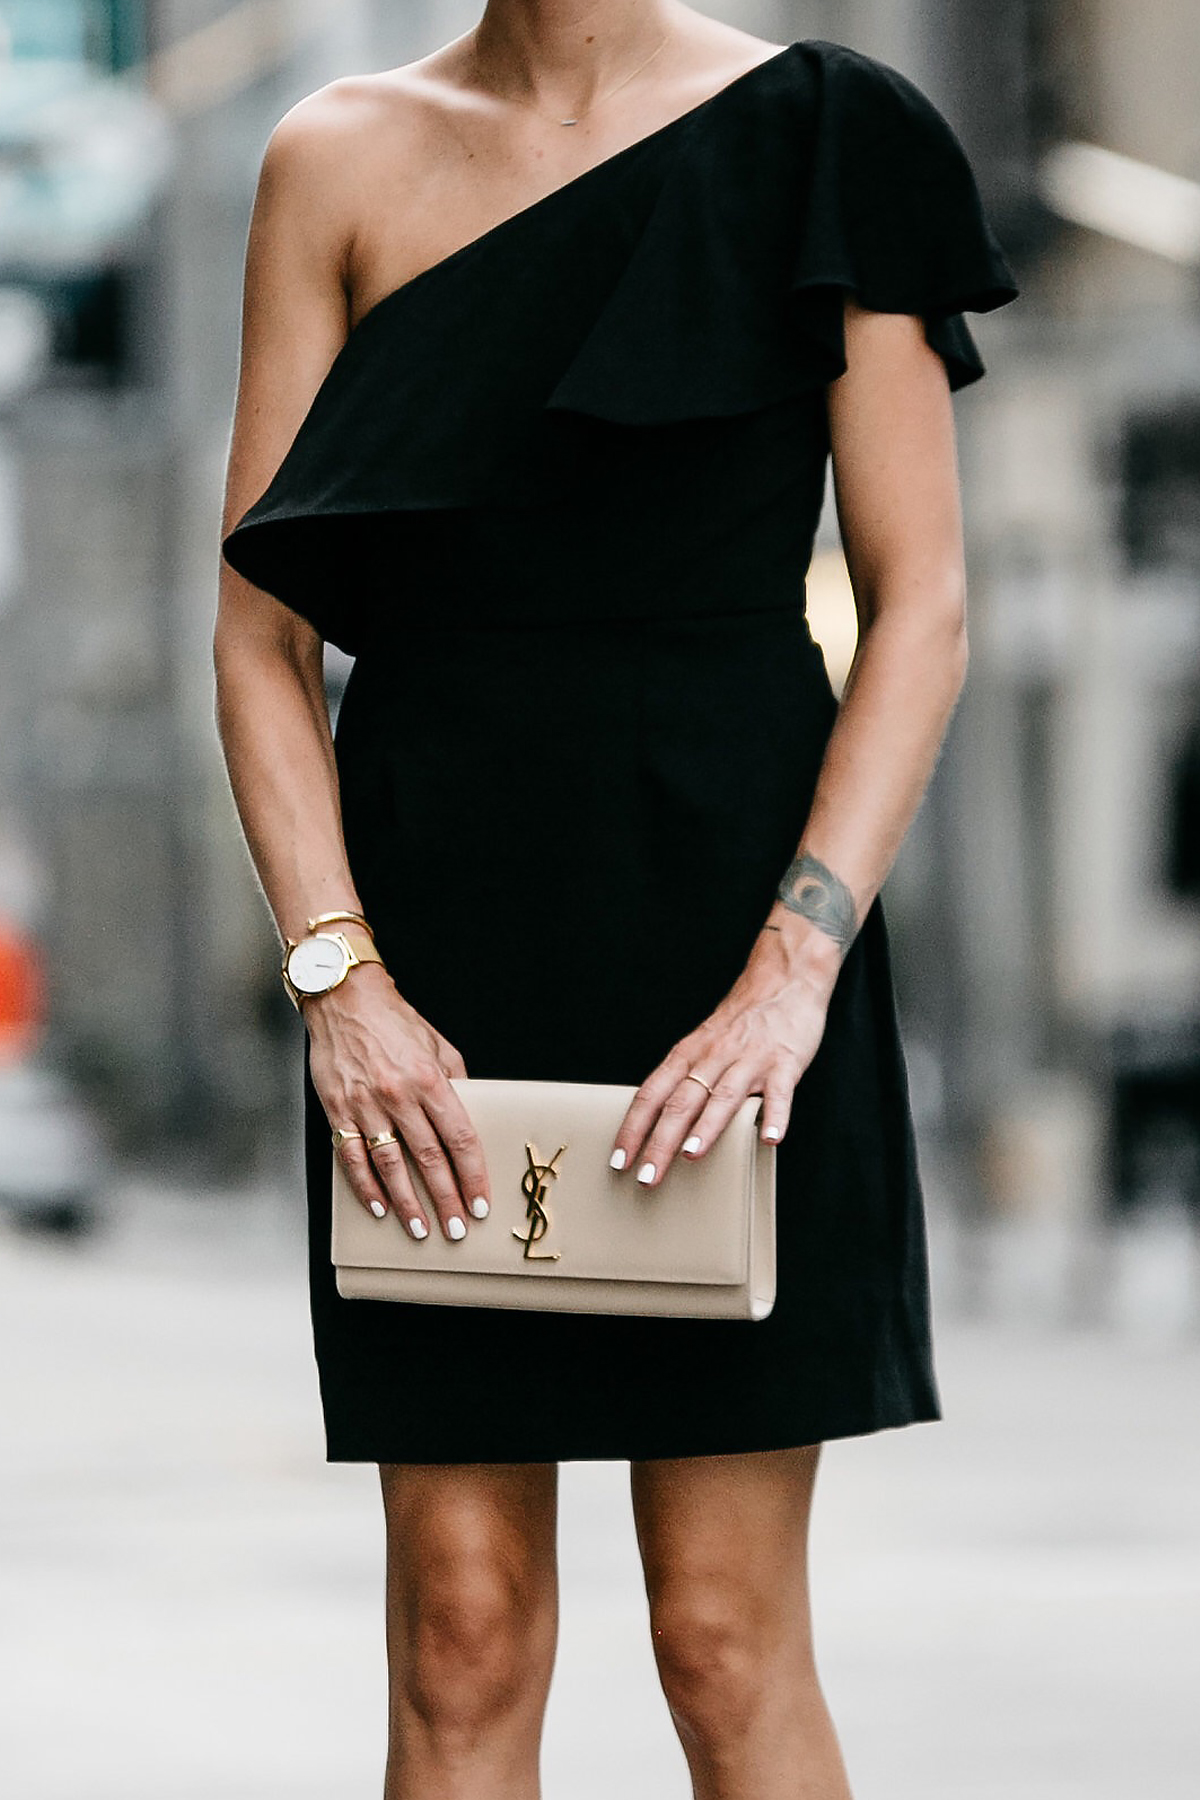 Nordstrom Black One Shoulder Ruffle Dress Saint Laurent Monogram Clutch Fashion Jackson Dallas Blogger Fashion Blogger Street Style